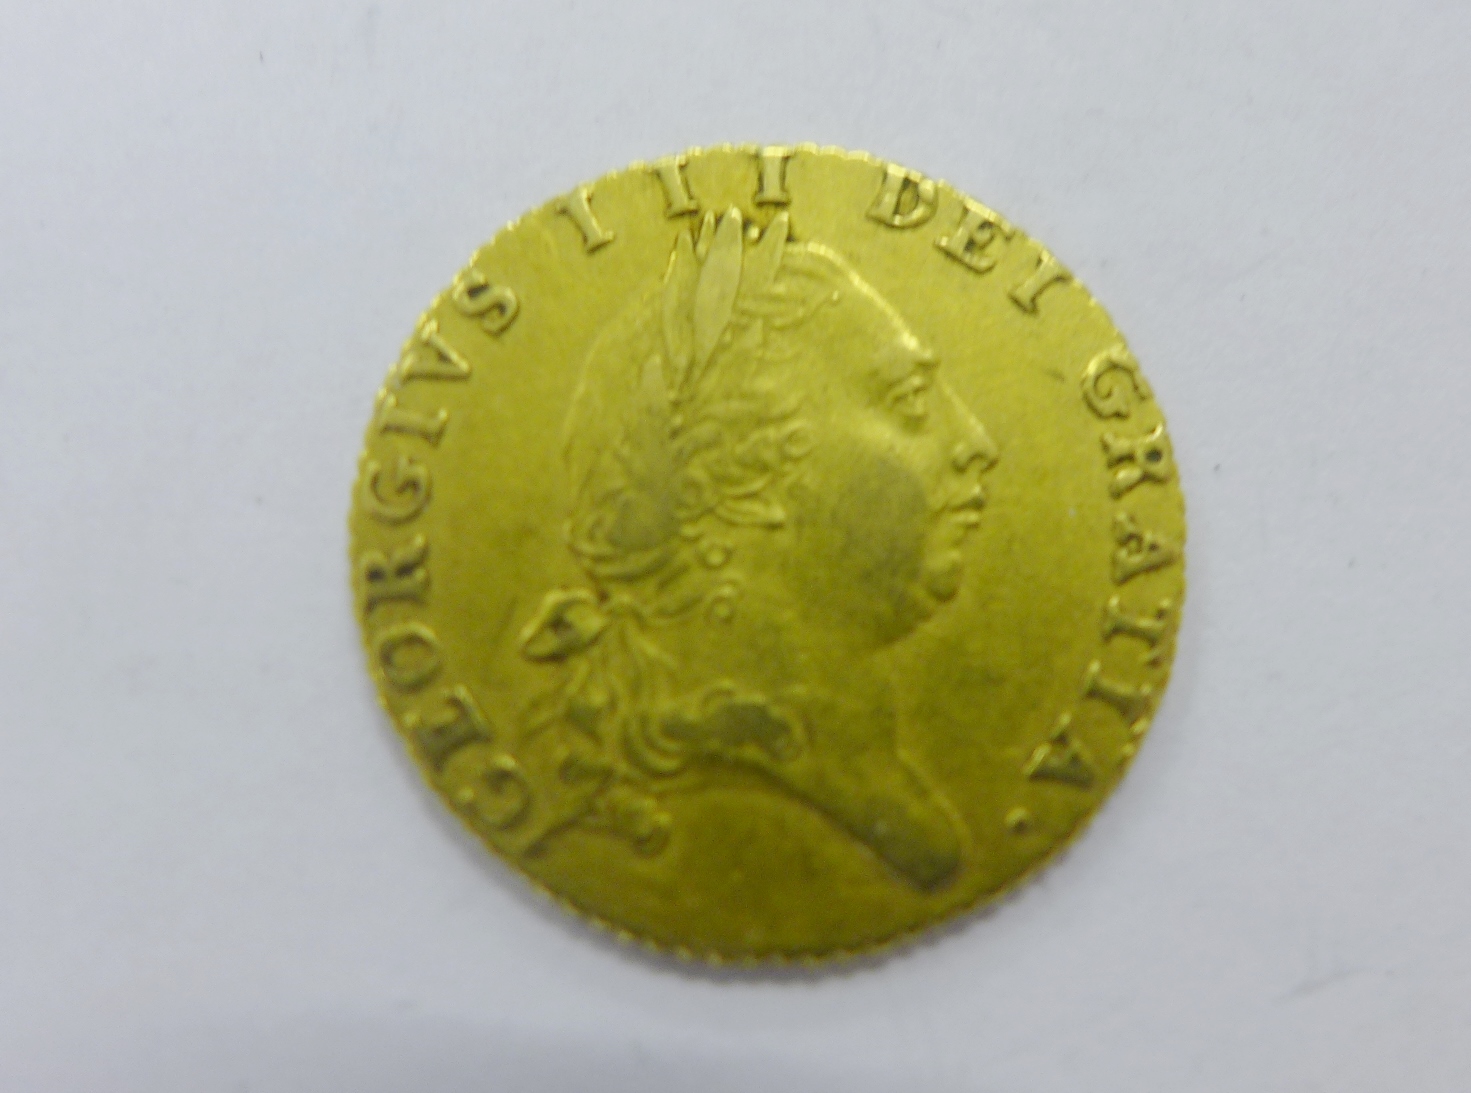 George III gold spade guinea, dated 1787